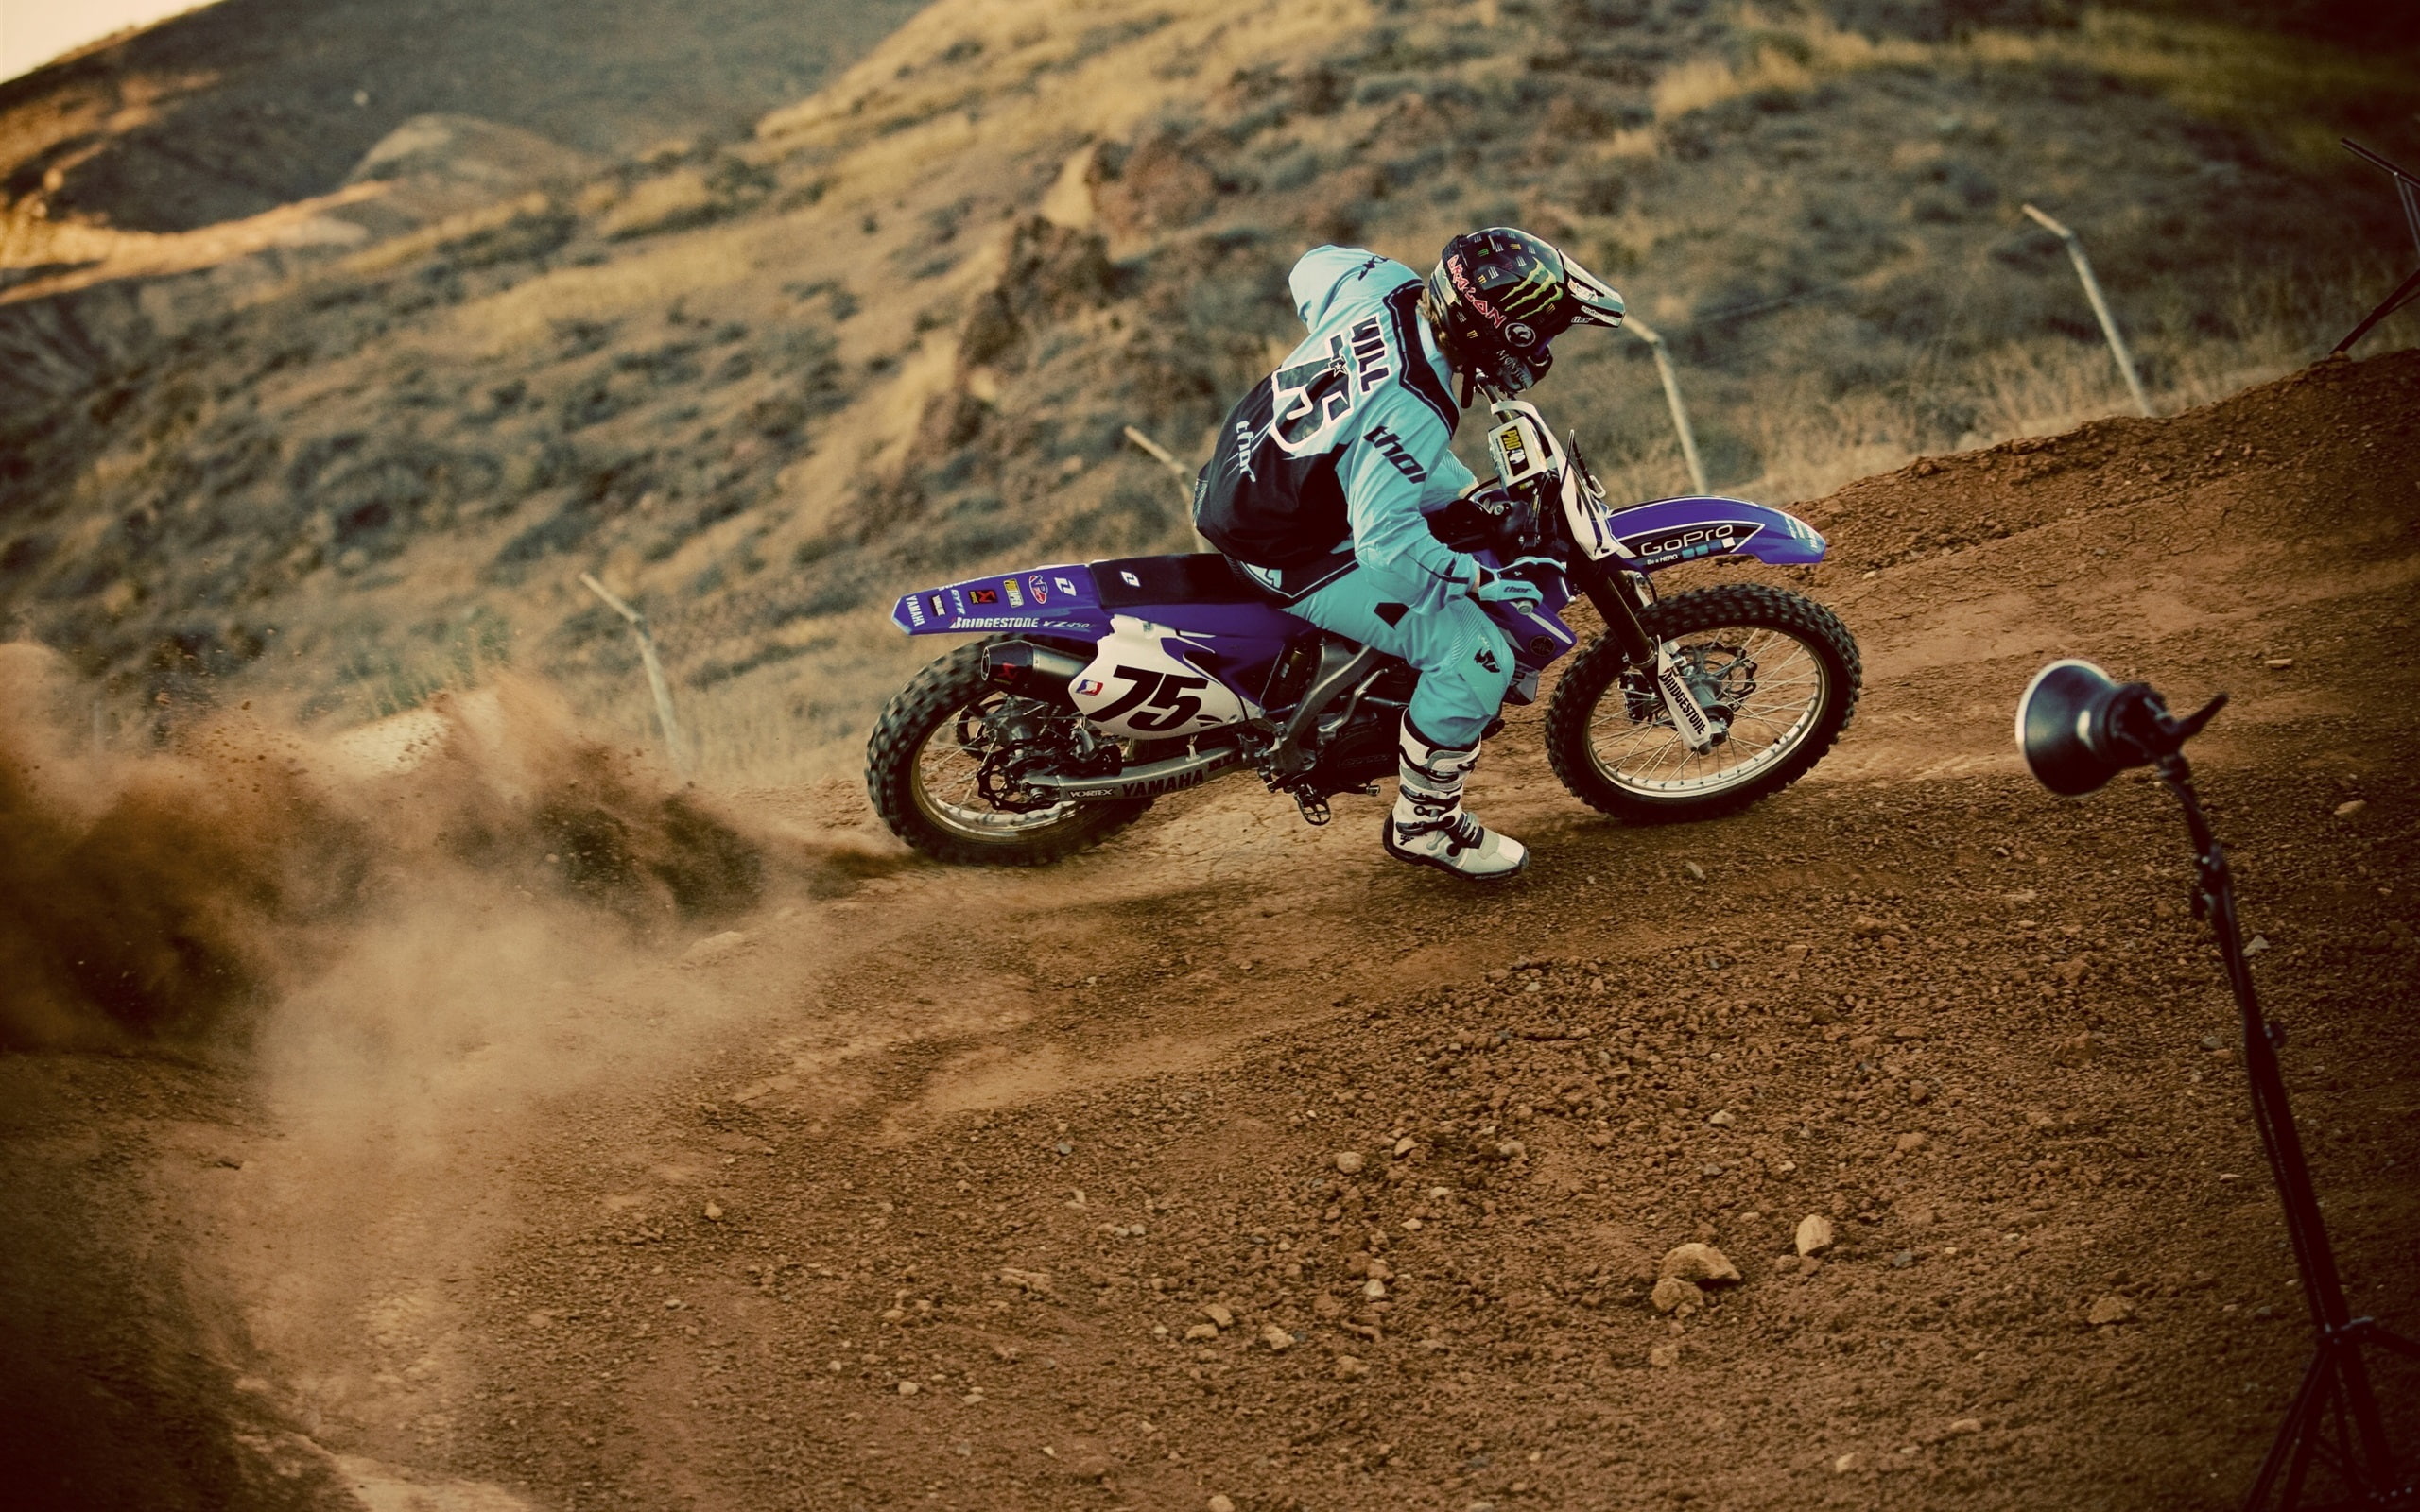 Motocross, pilot, dust, extreme sports